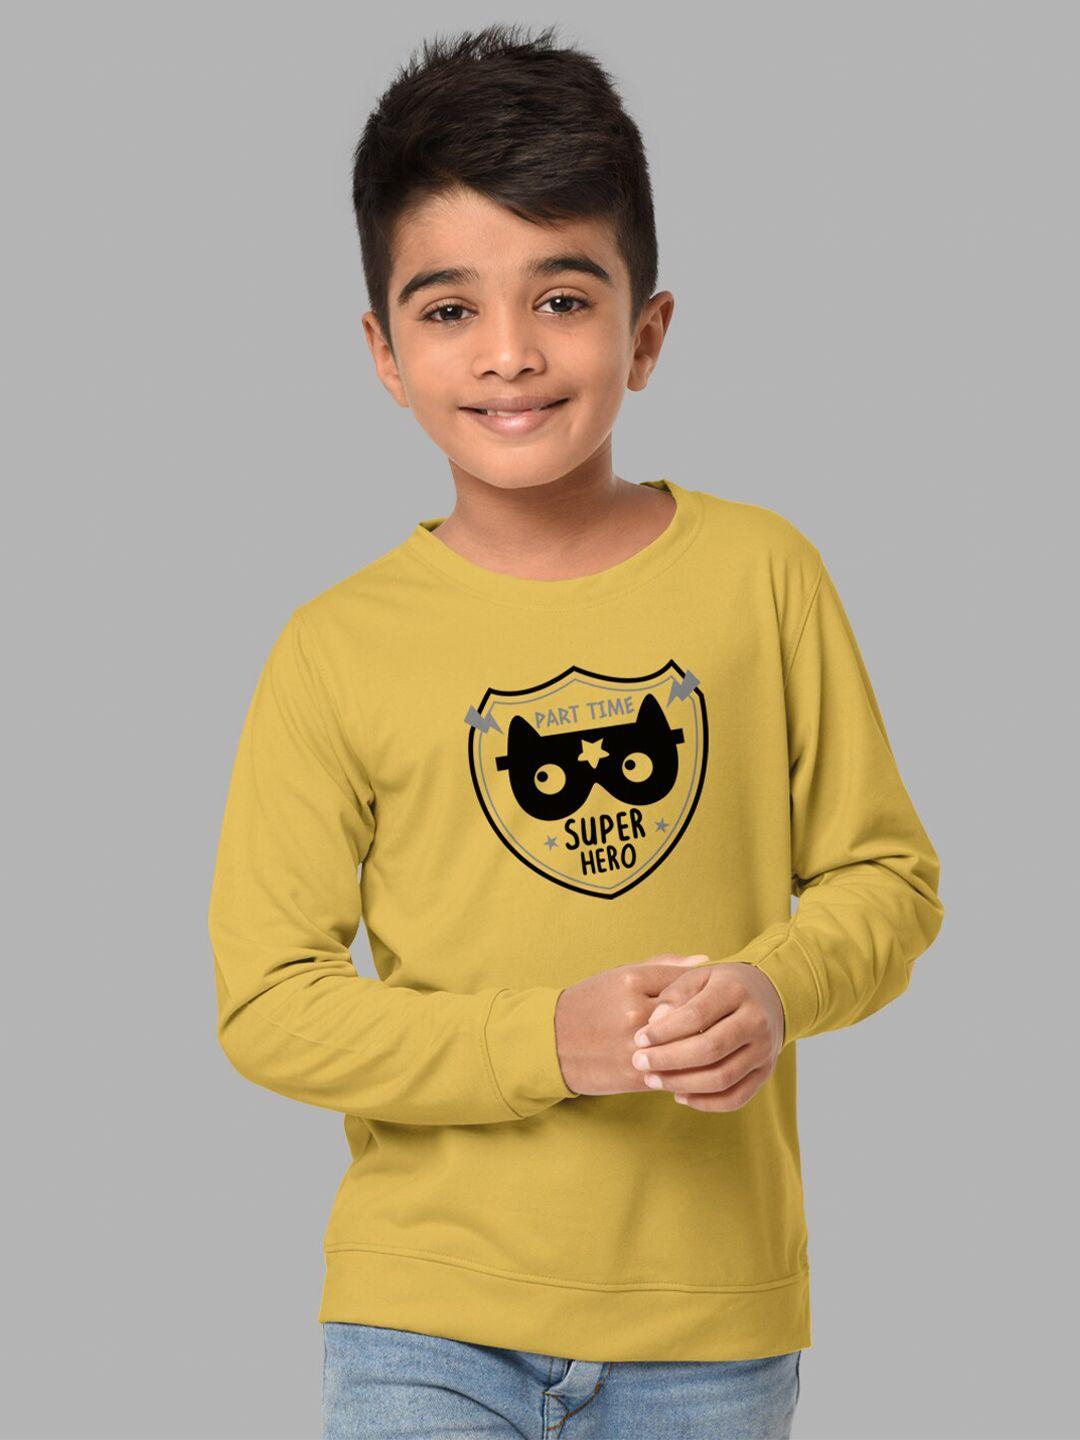 hellcat-boys-yellow-printed-regular-fit-blended-cotton-long-sleeve-bio-finish-t-shirt